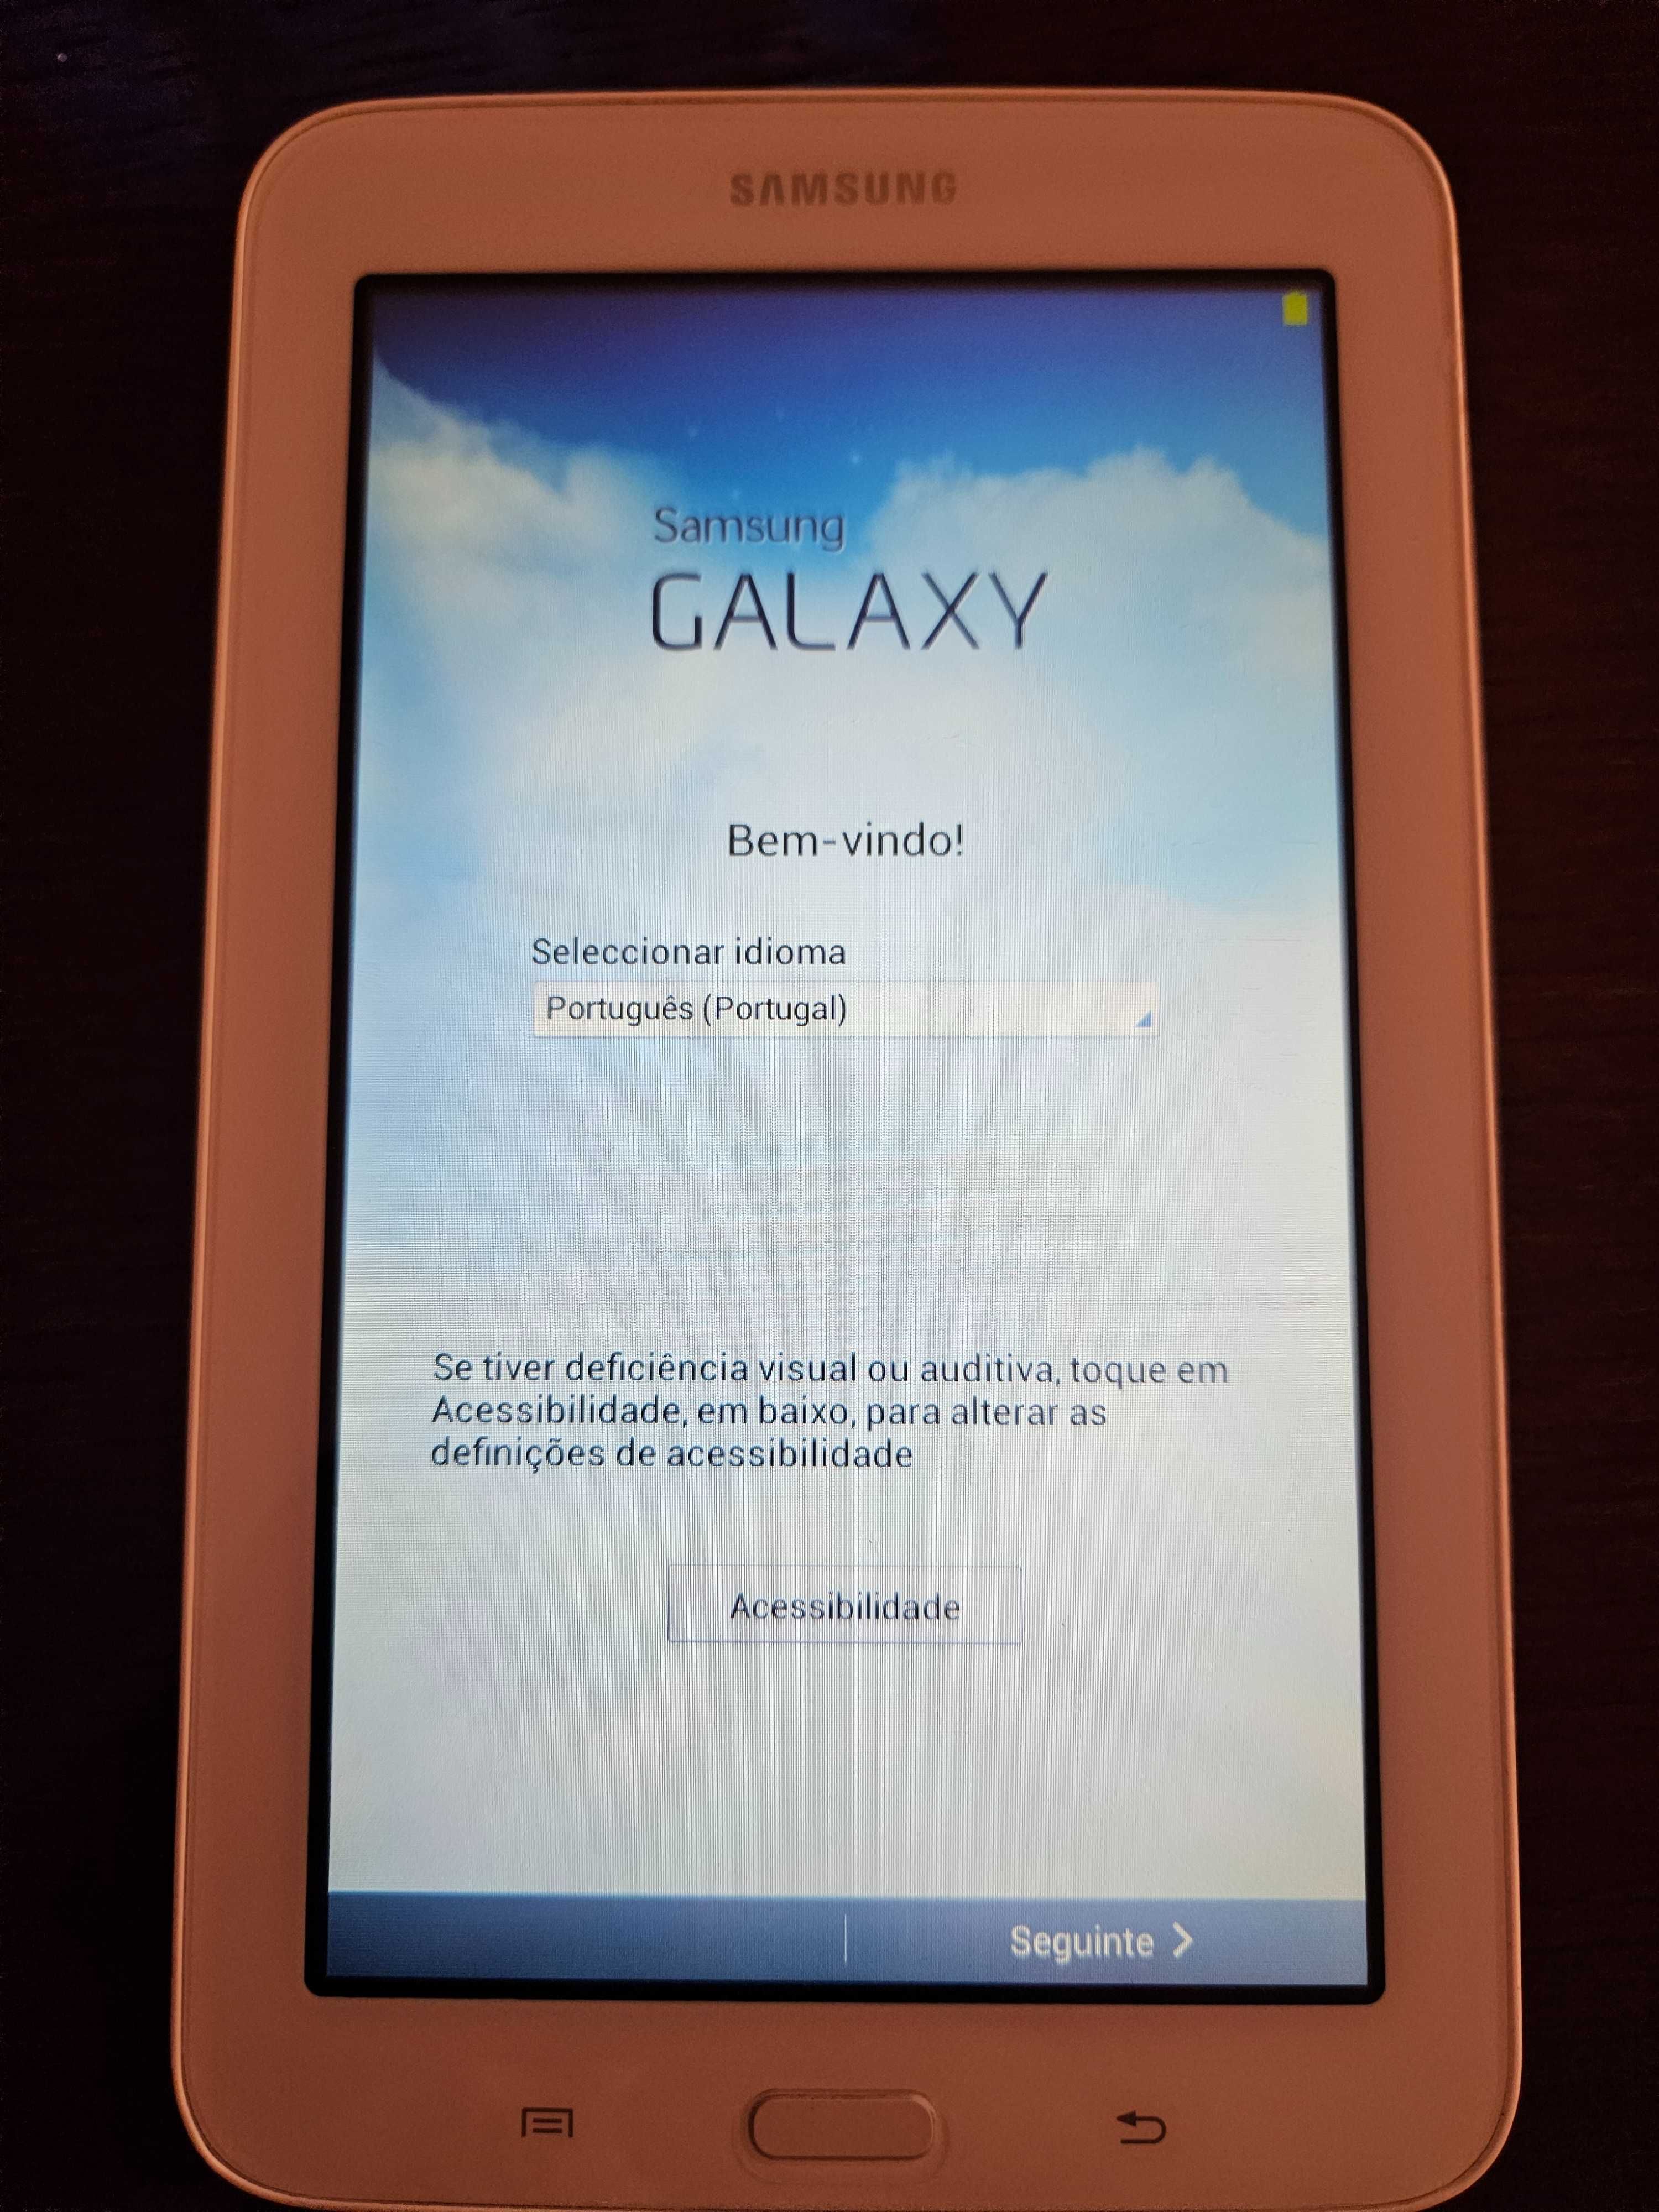 Samsung Galaxy Tab SM T110 7.0 Lite Wi-Fi